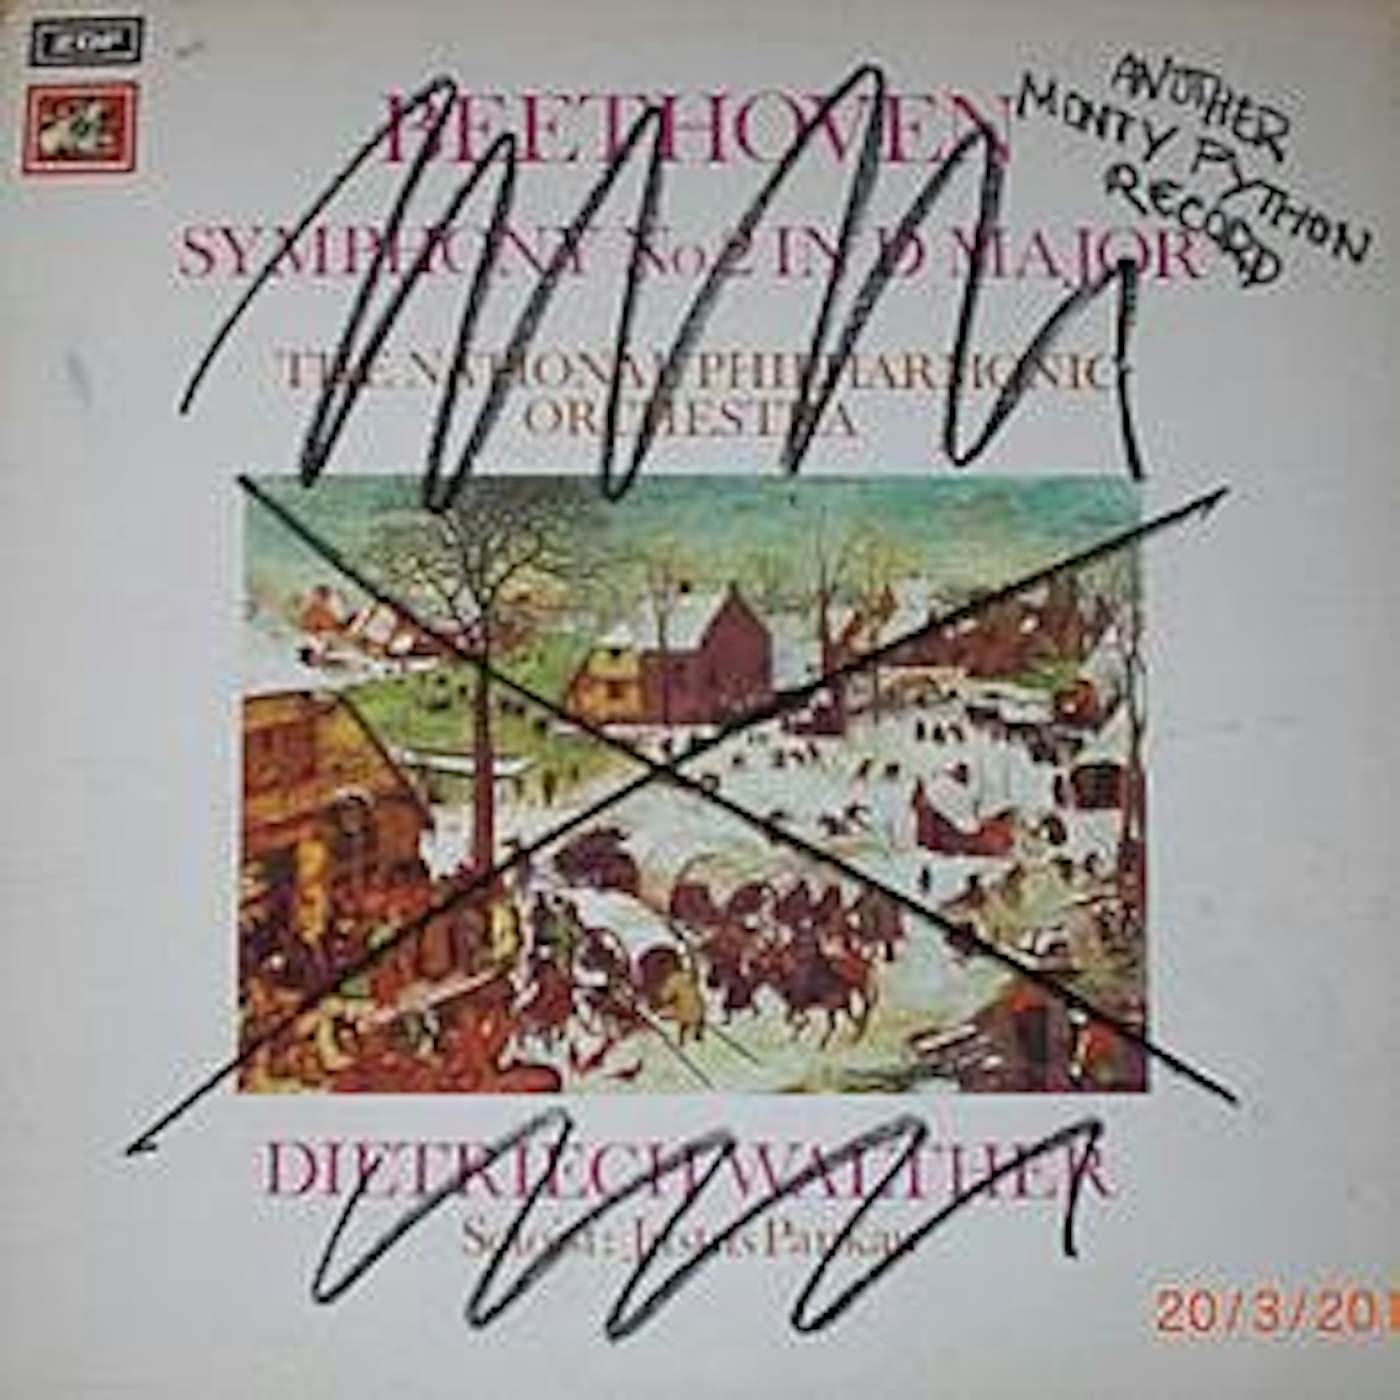 Another Monty Python Record Vinyl Record